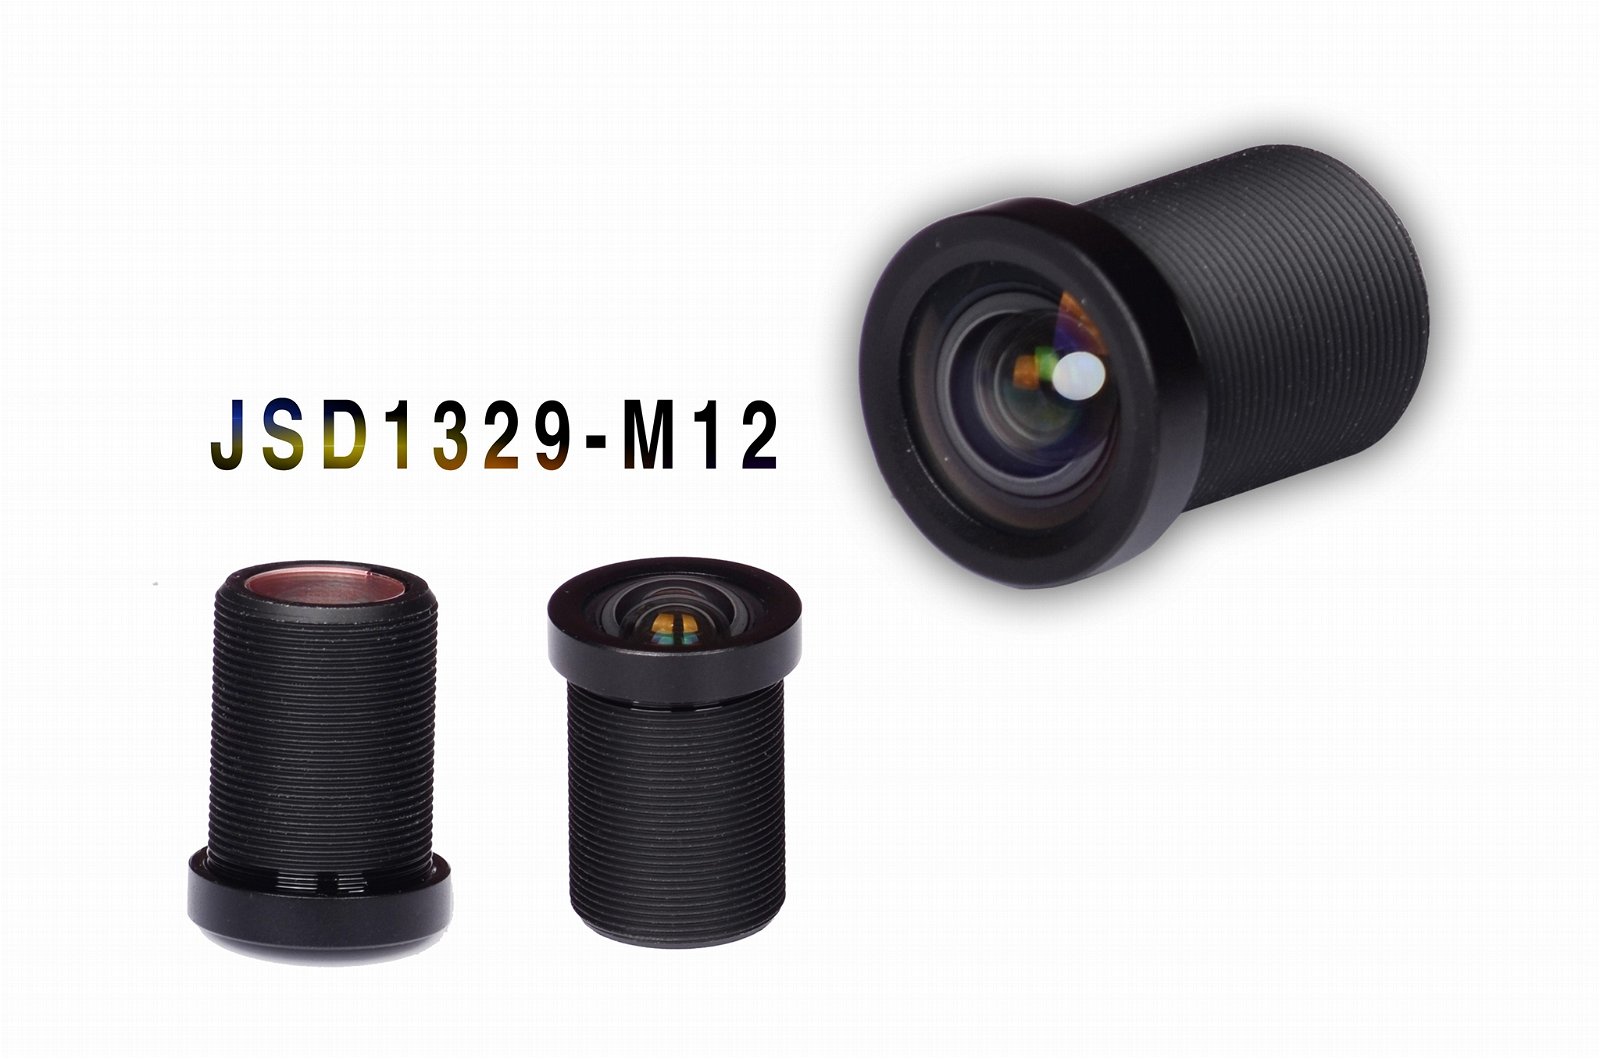 1/2.3" 4.3mm low distortion lens with 14 megapixel board lens  1